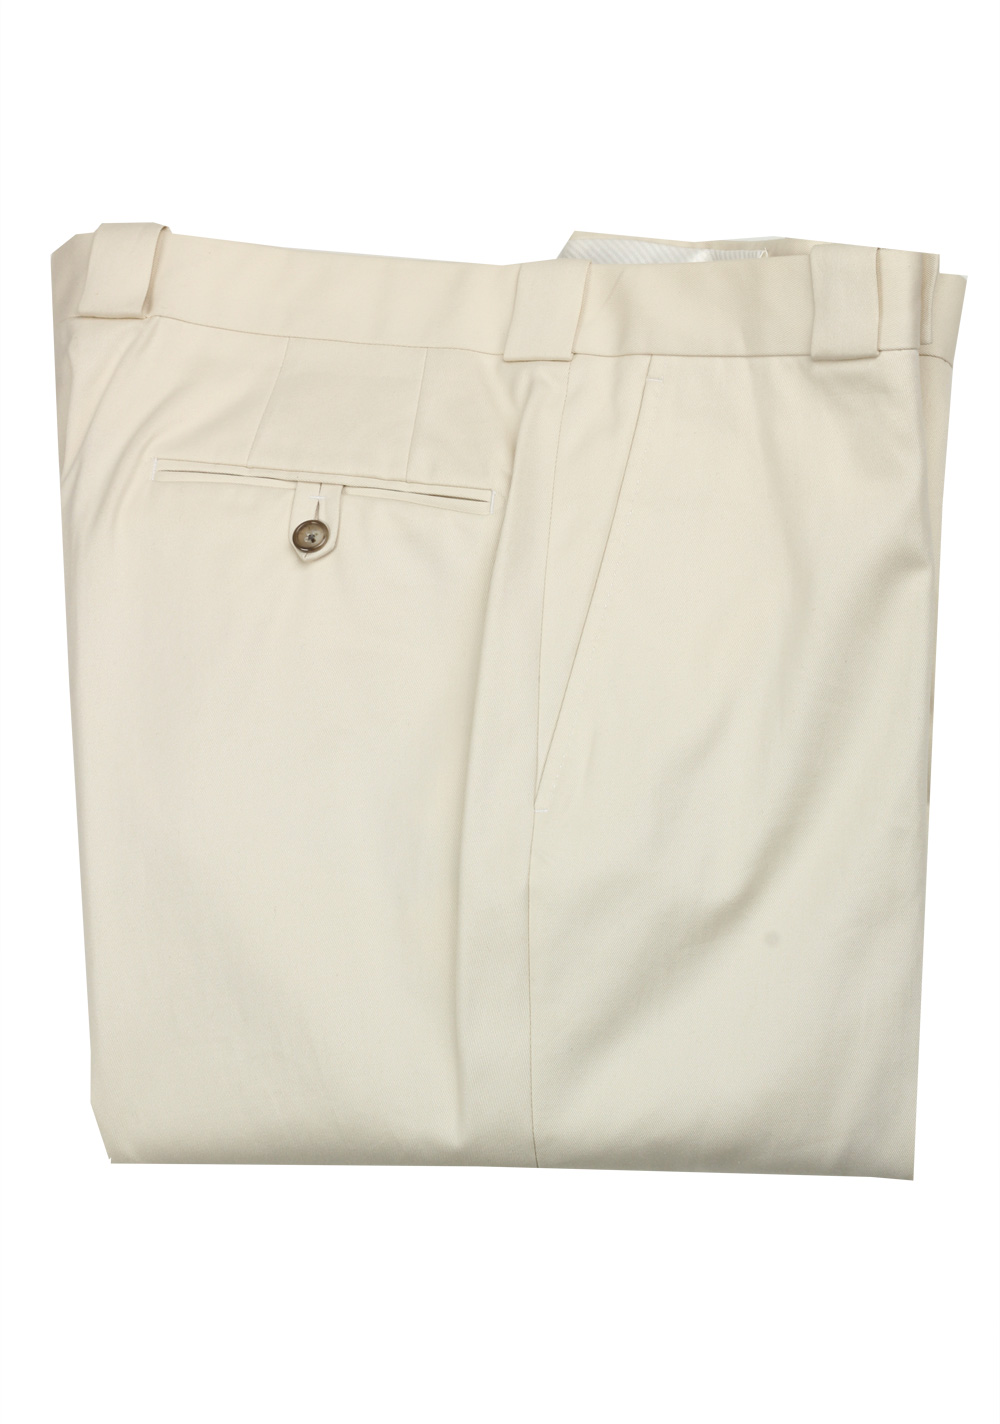 TOM FORD Beige Cotton Trousers Size 56 / 40 U.S. | Costume Limité